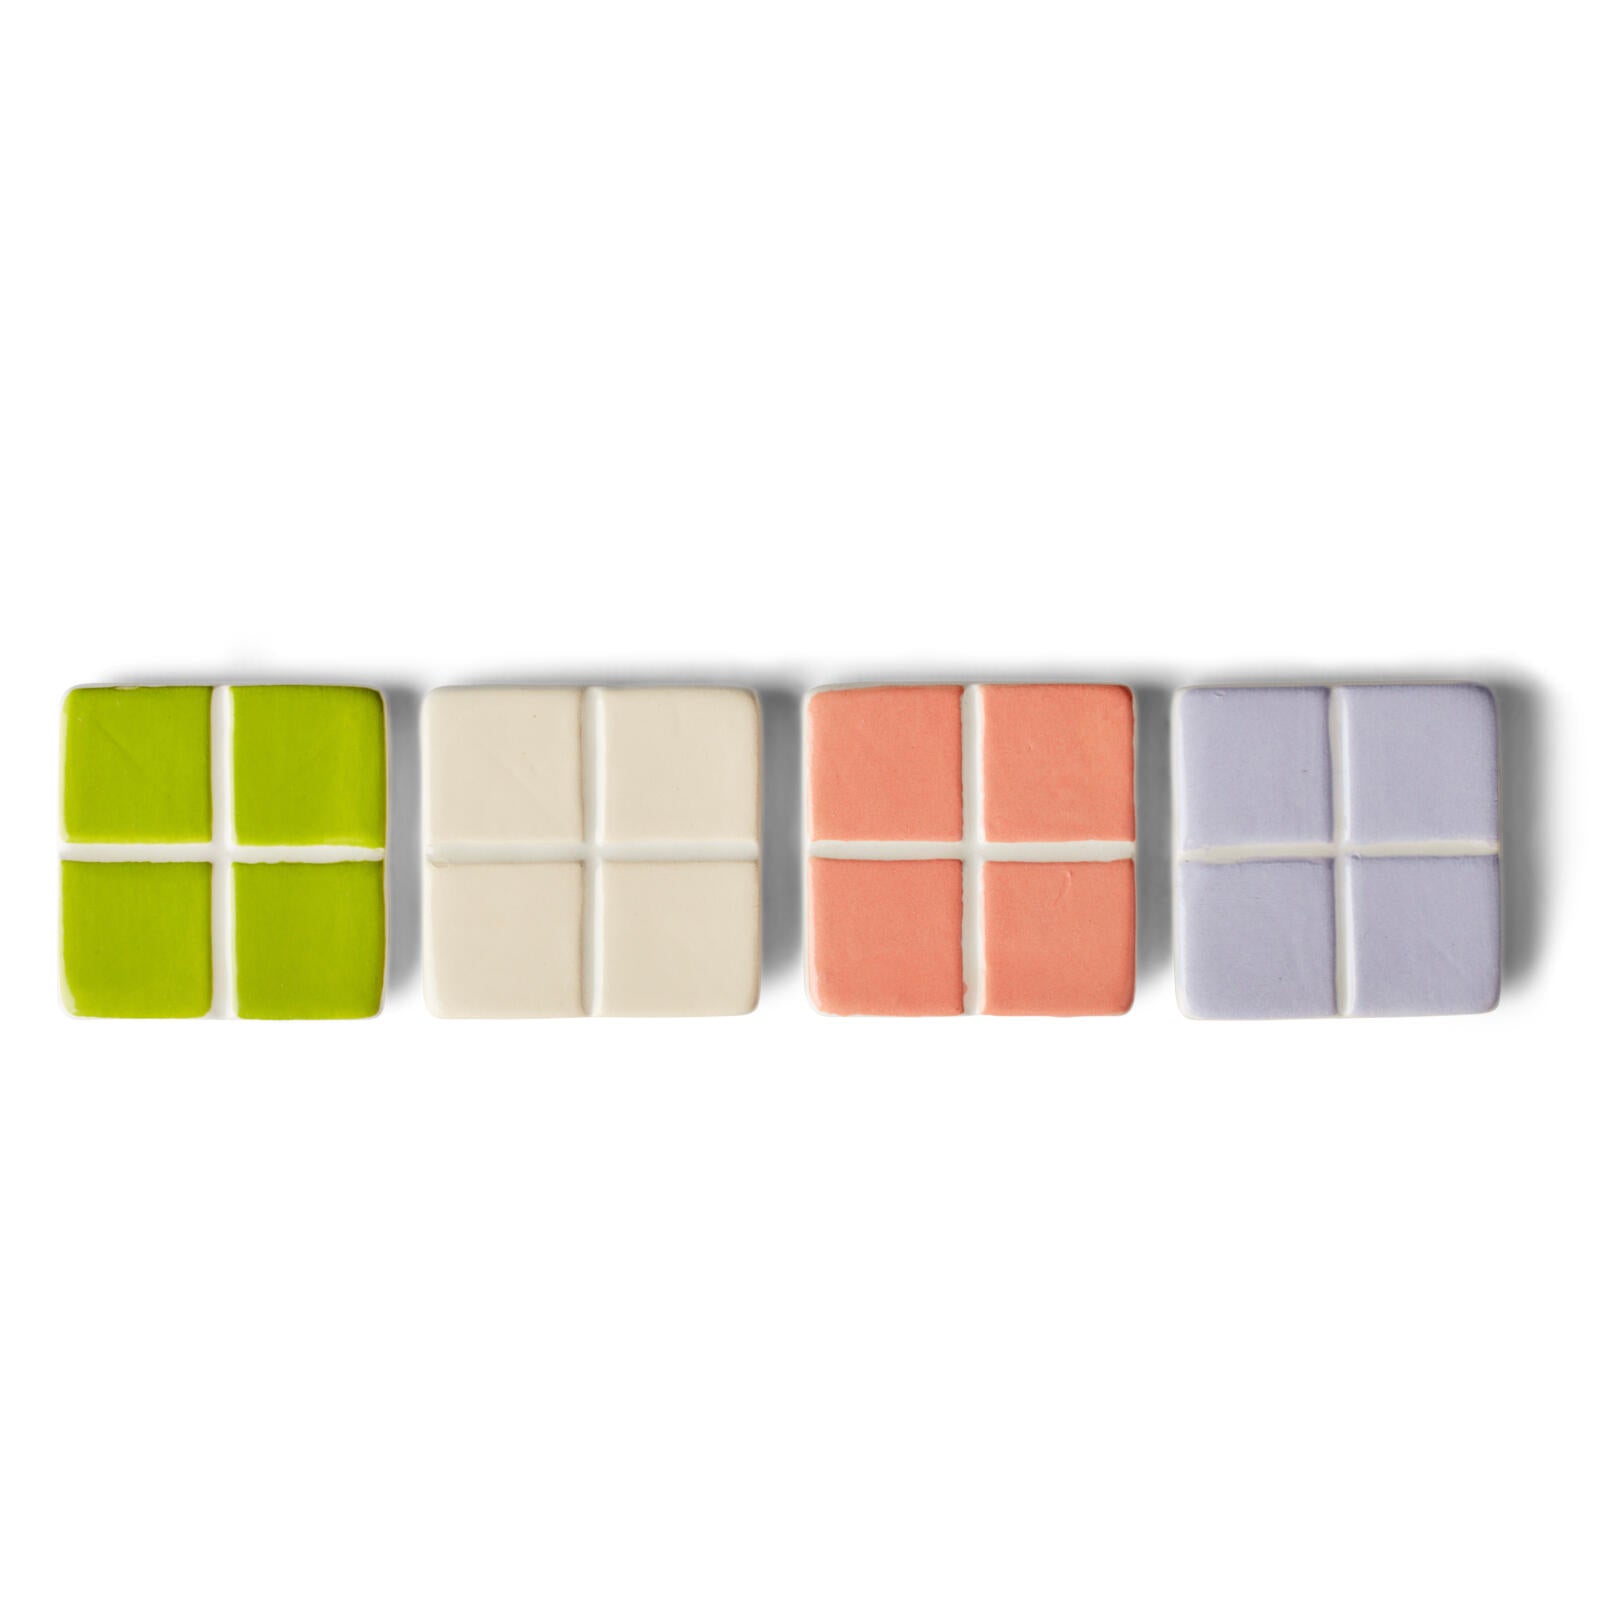 MOZAIK Magnets set of 4 green, purple, cream, peach pink